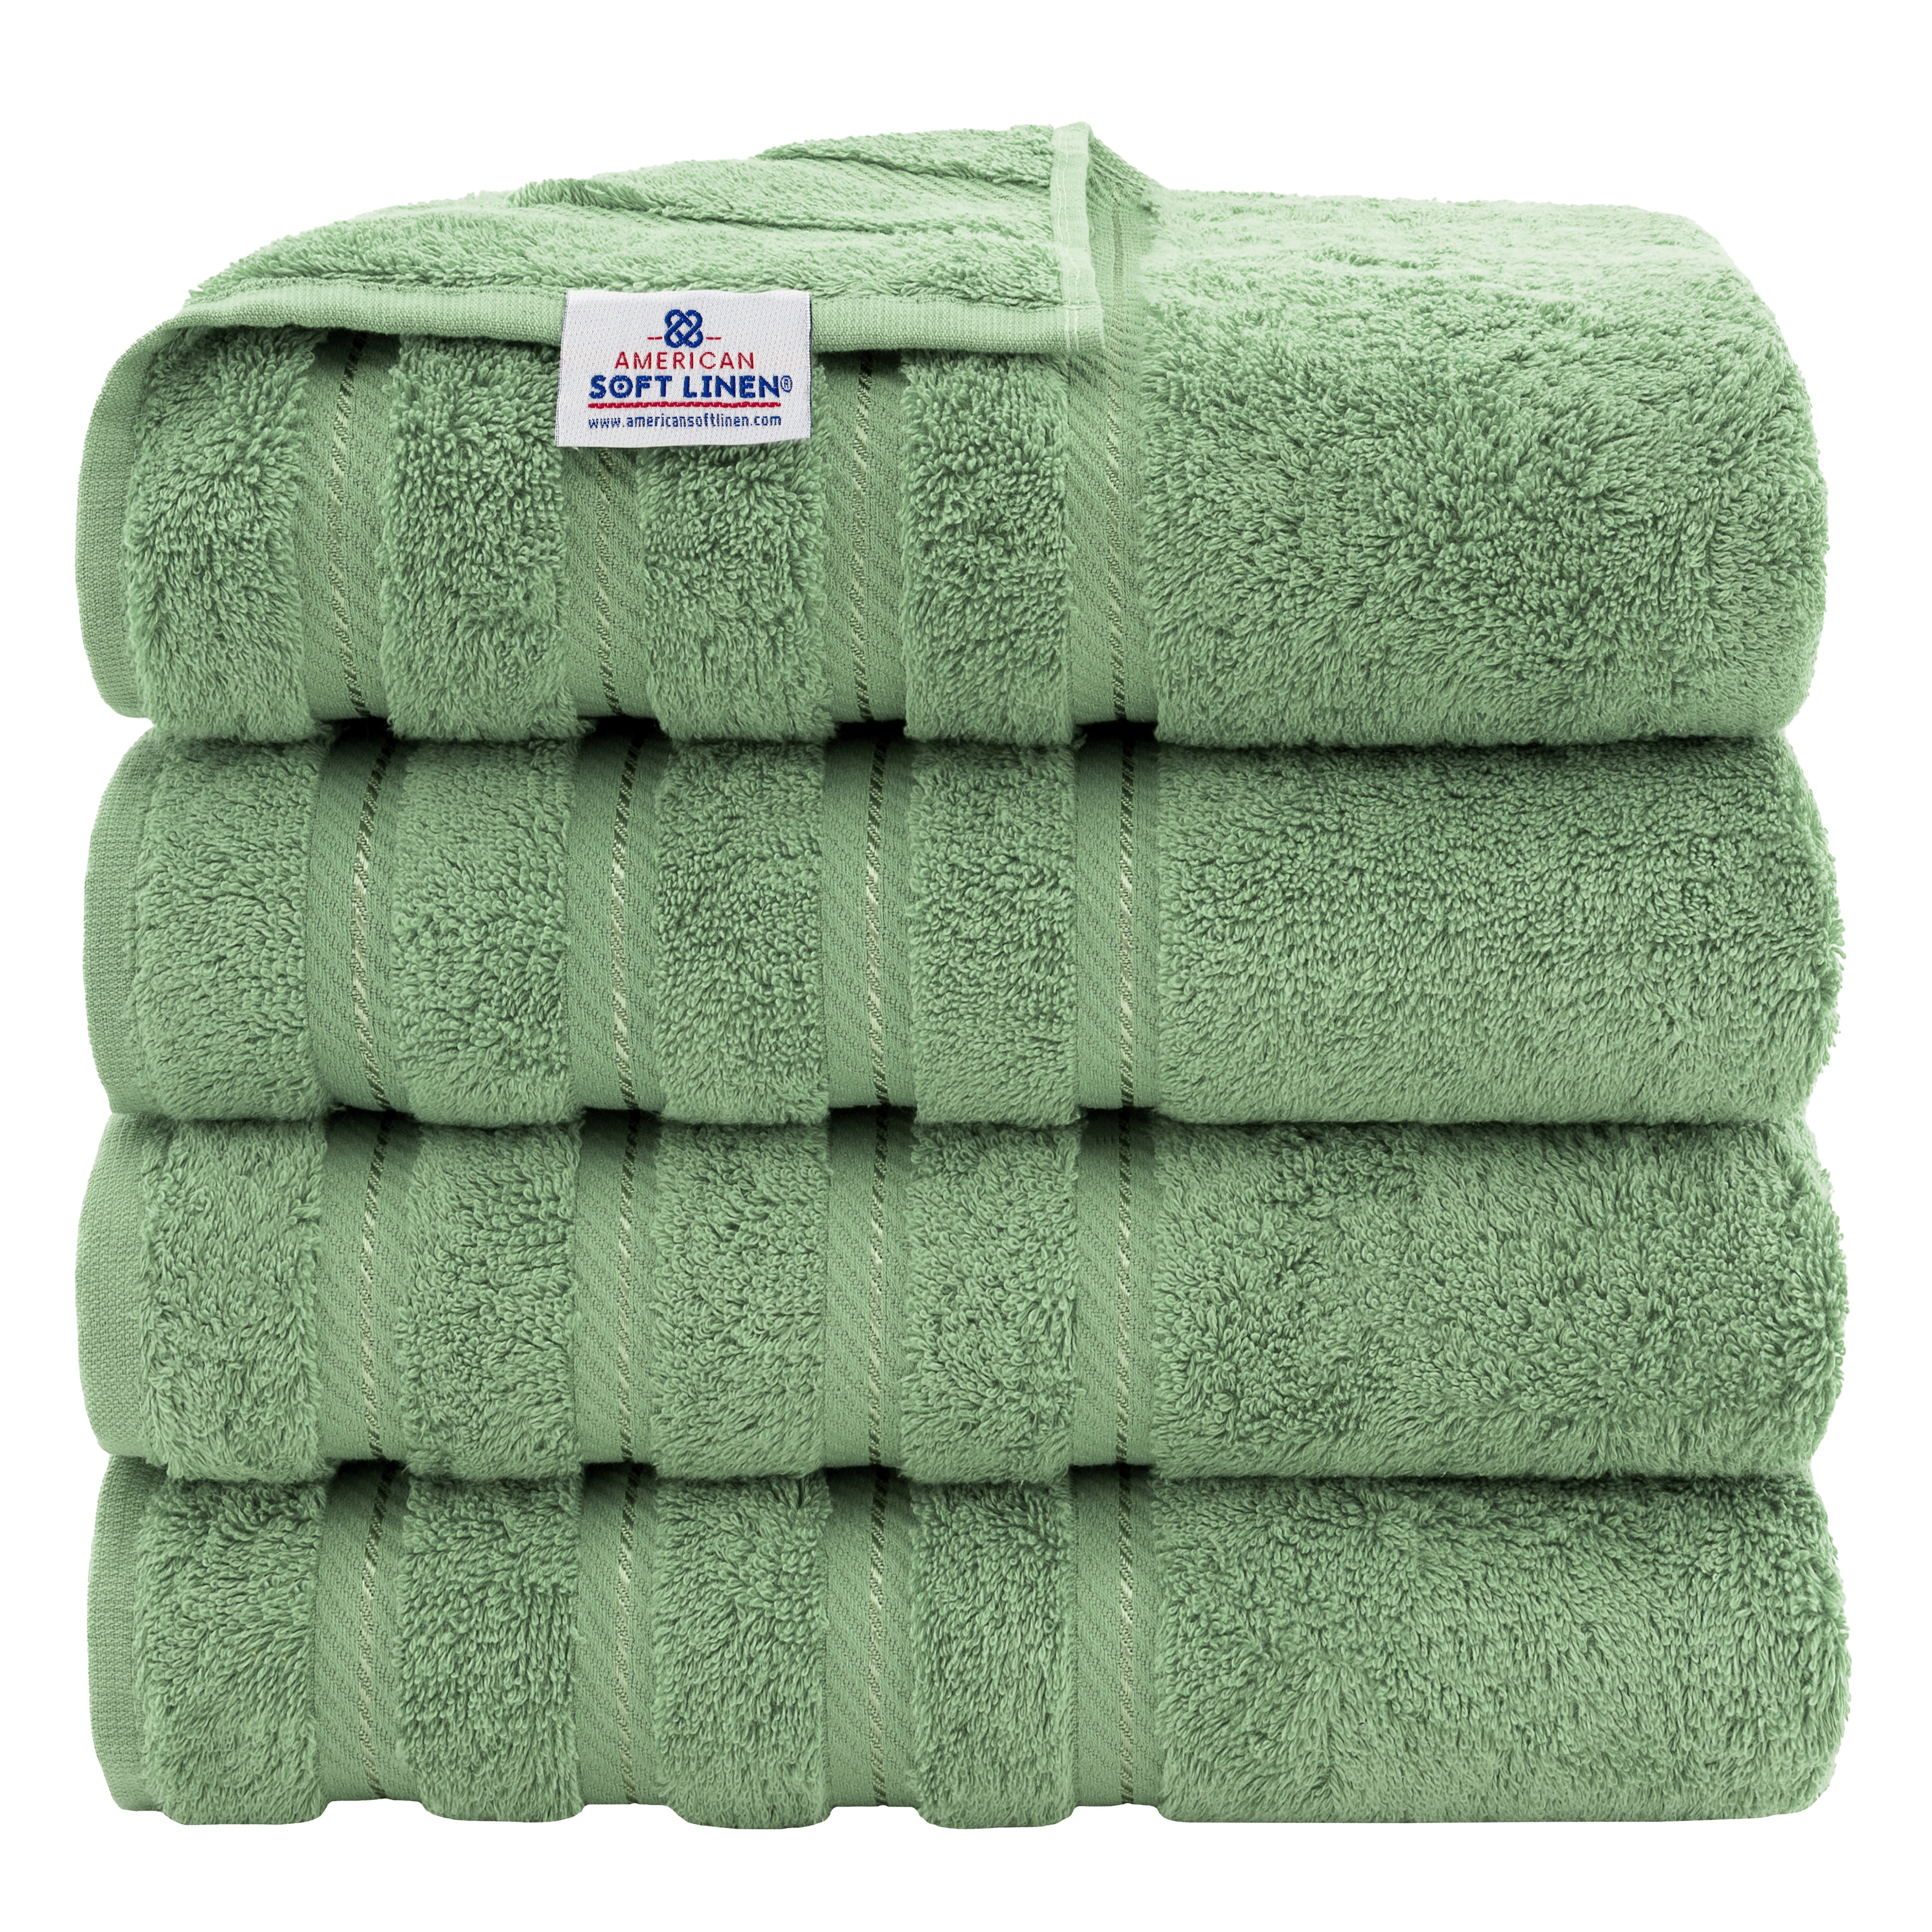 https://ak1.ostkcdn.com/images/products/is/images/direct/f574777ec8ece431d846373f788a8cee76a9044d/American-Soft-Linen-Turkish-Cotton-4-Piece-Bath-Towel-Set.jpg